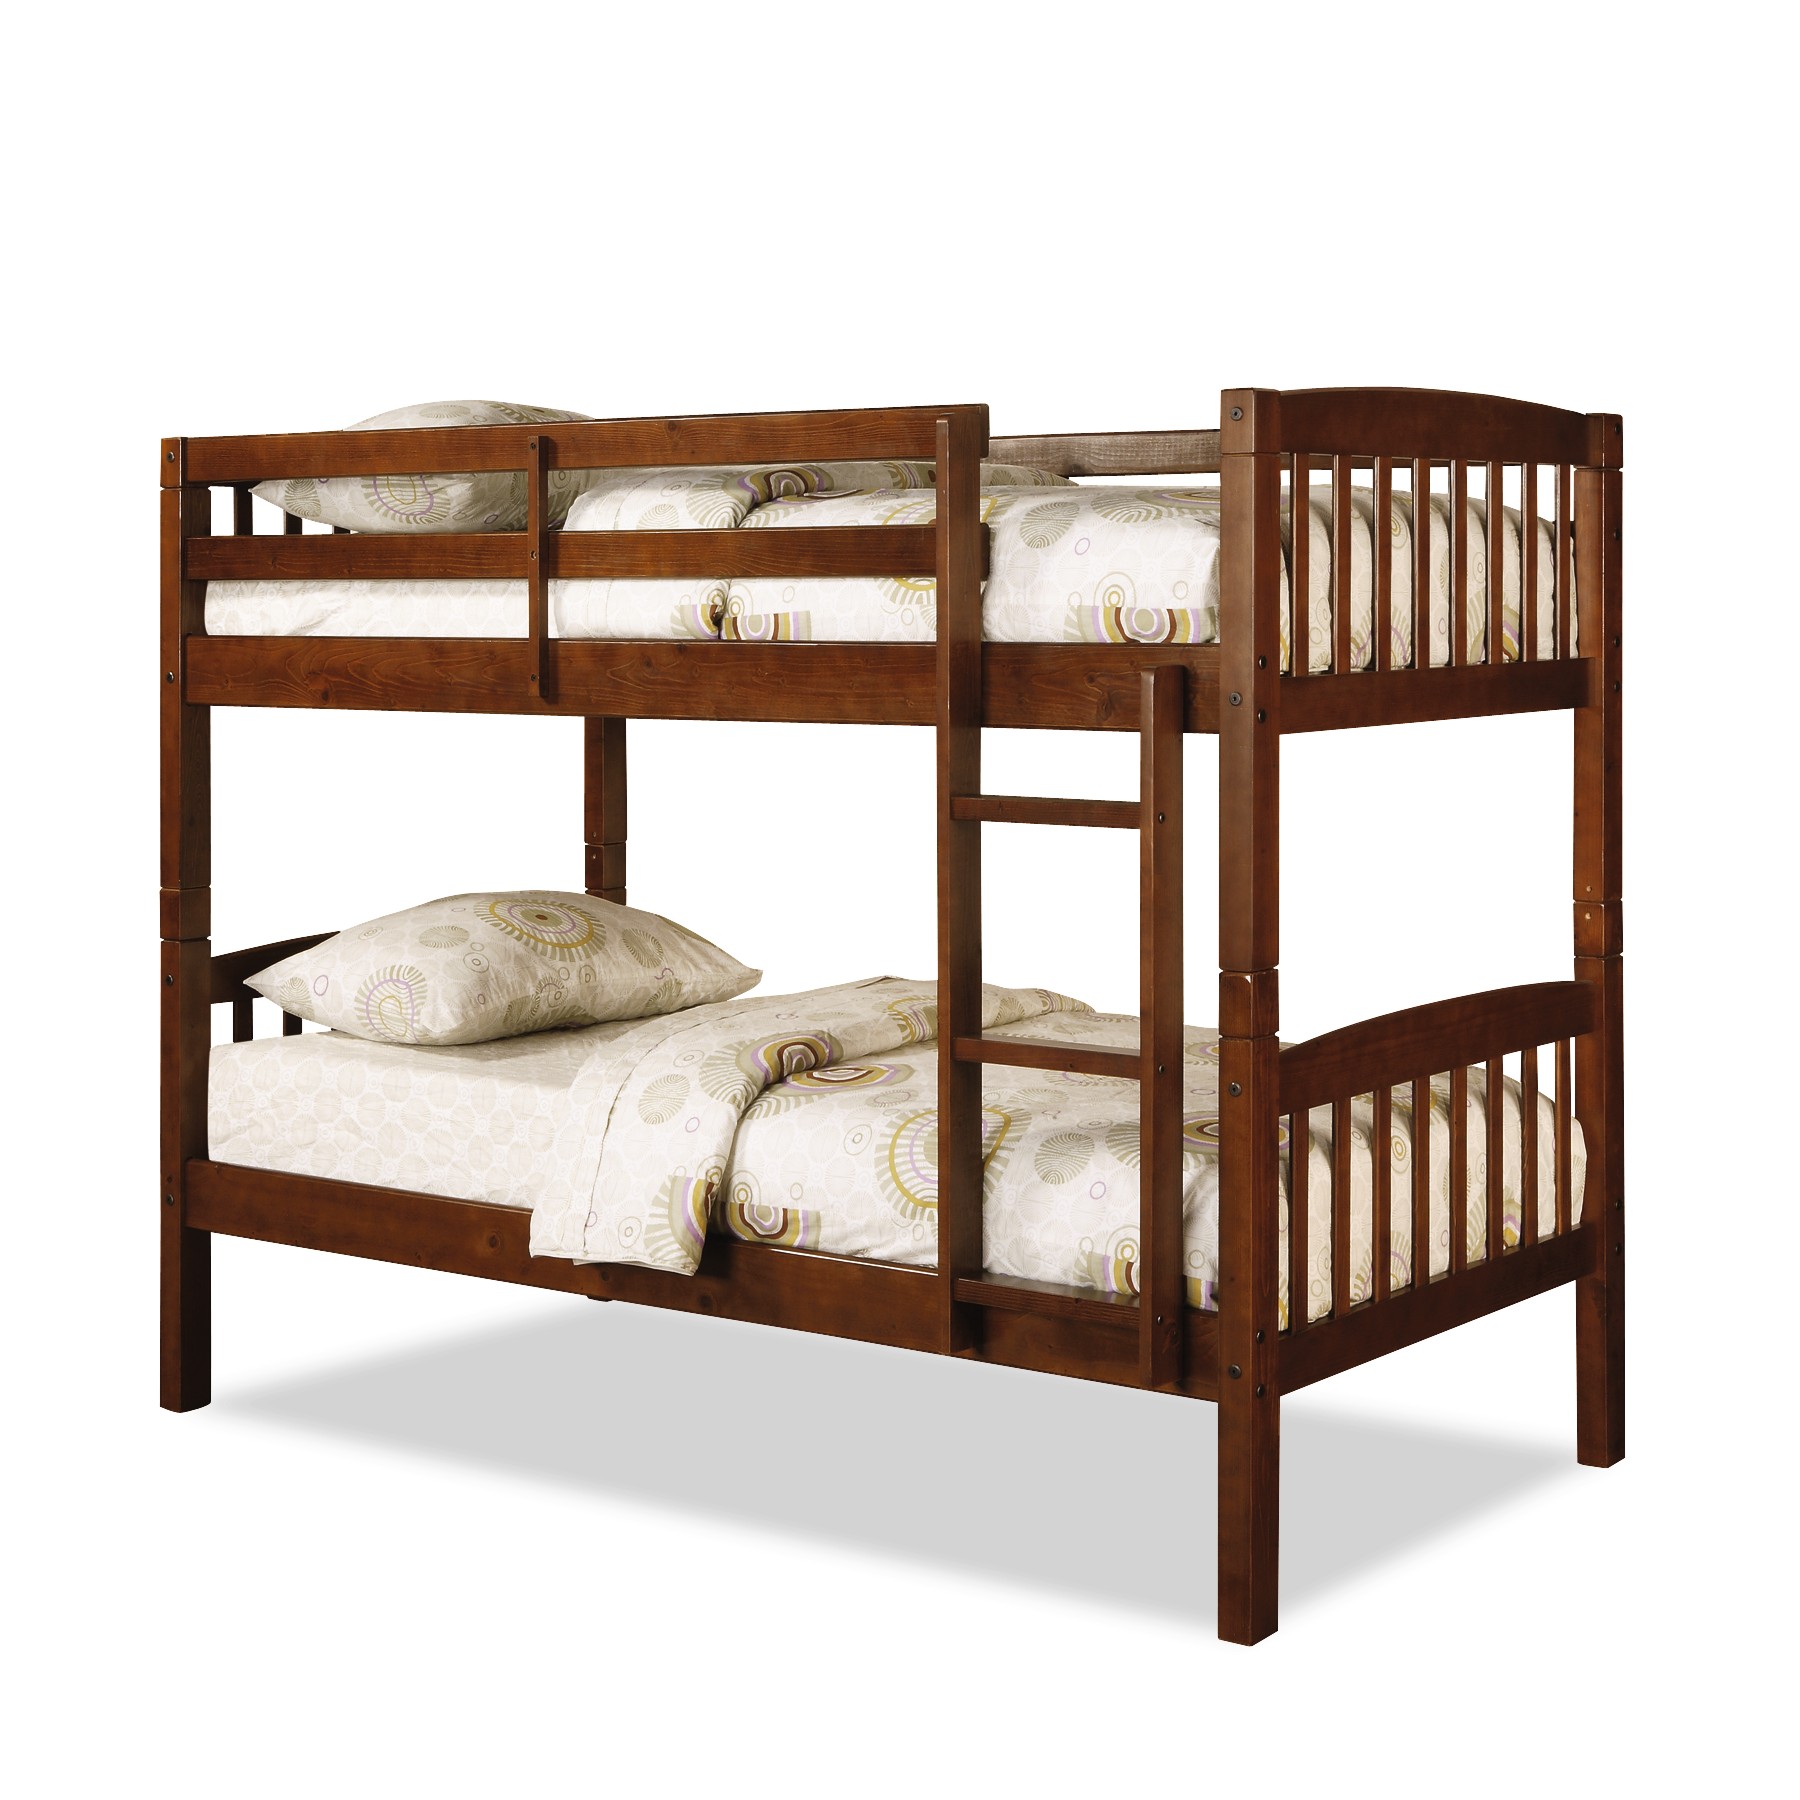 Dorel Belmont Twin Bunk Bed Walnut, Kmart Futon Bunk Bed